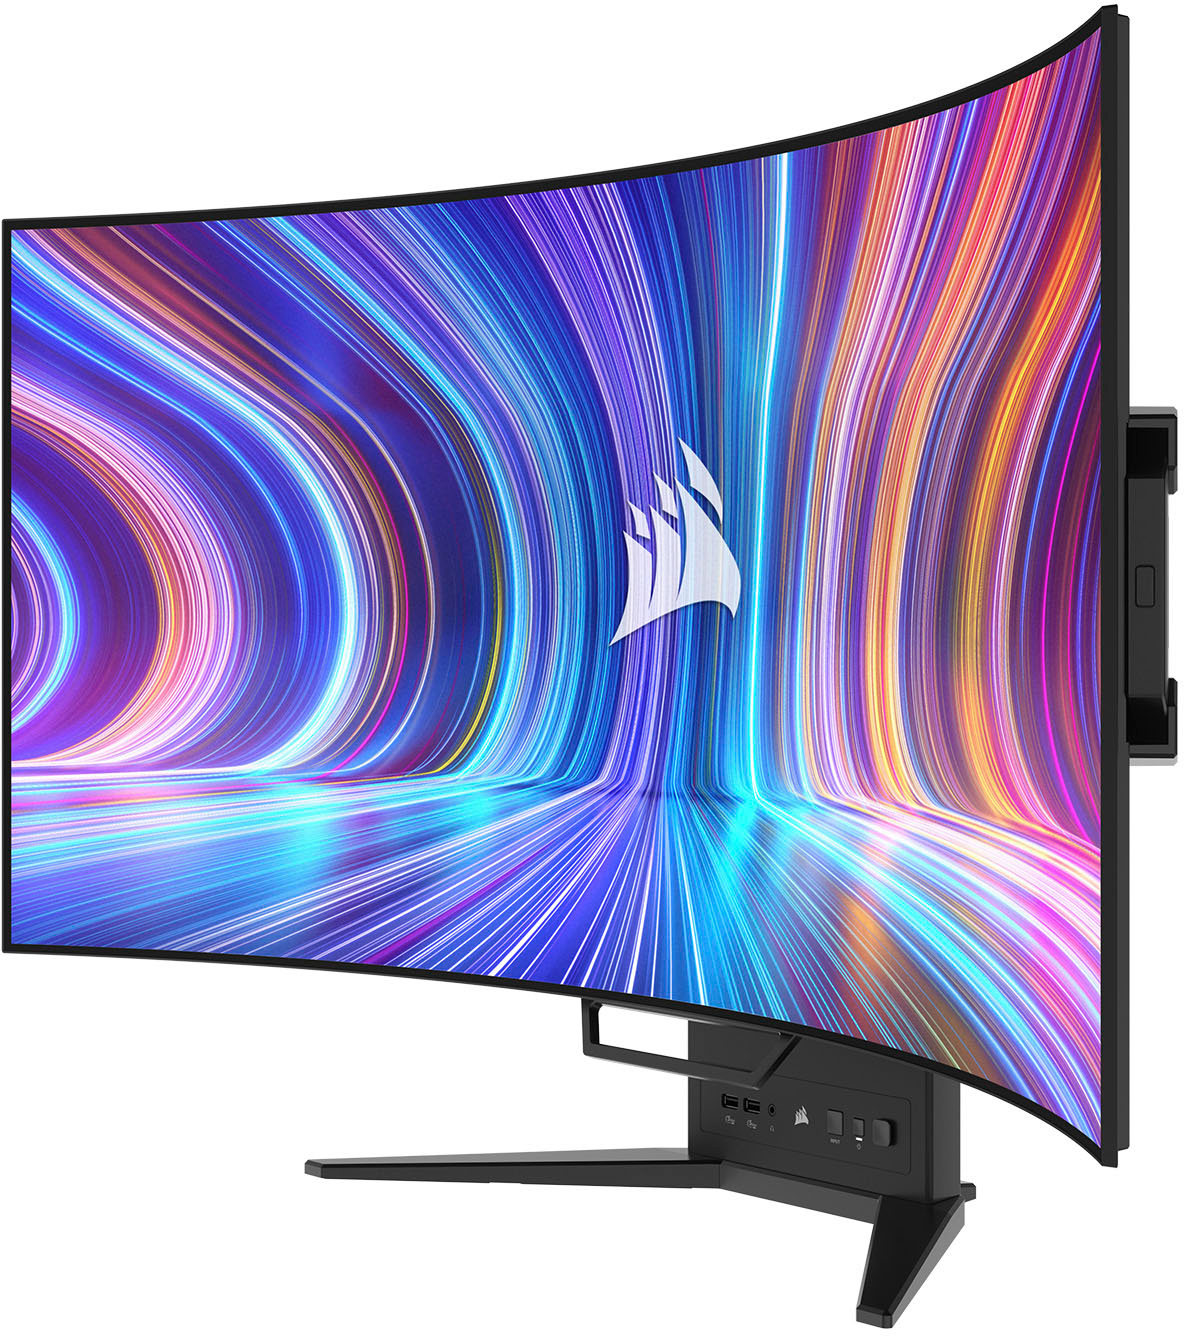 Angle View: Samsung - Odyssey G3 24"  FHD FreeSync Premium 144Hz, 1ms Gaming Monitor (DisplayPort, HDMI) - Black